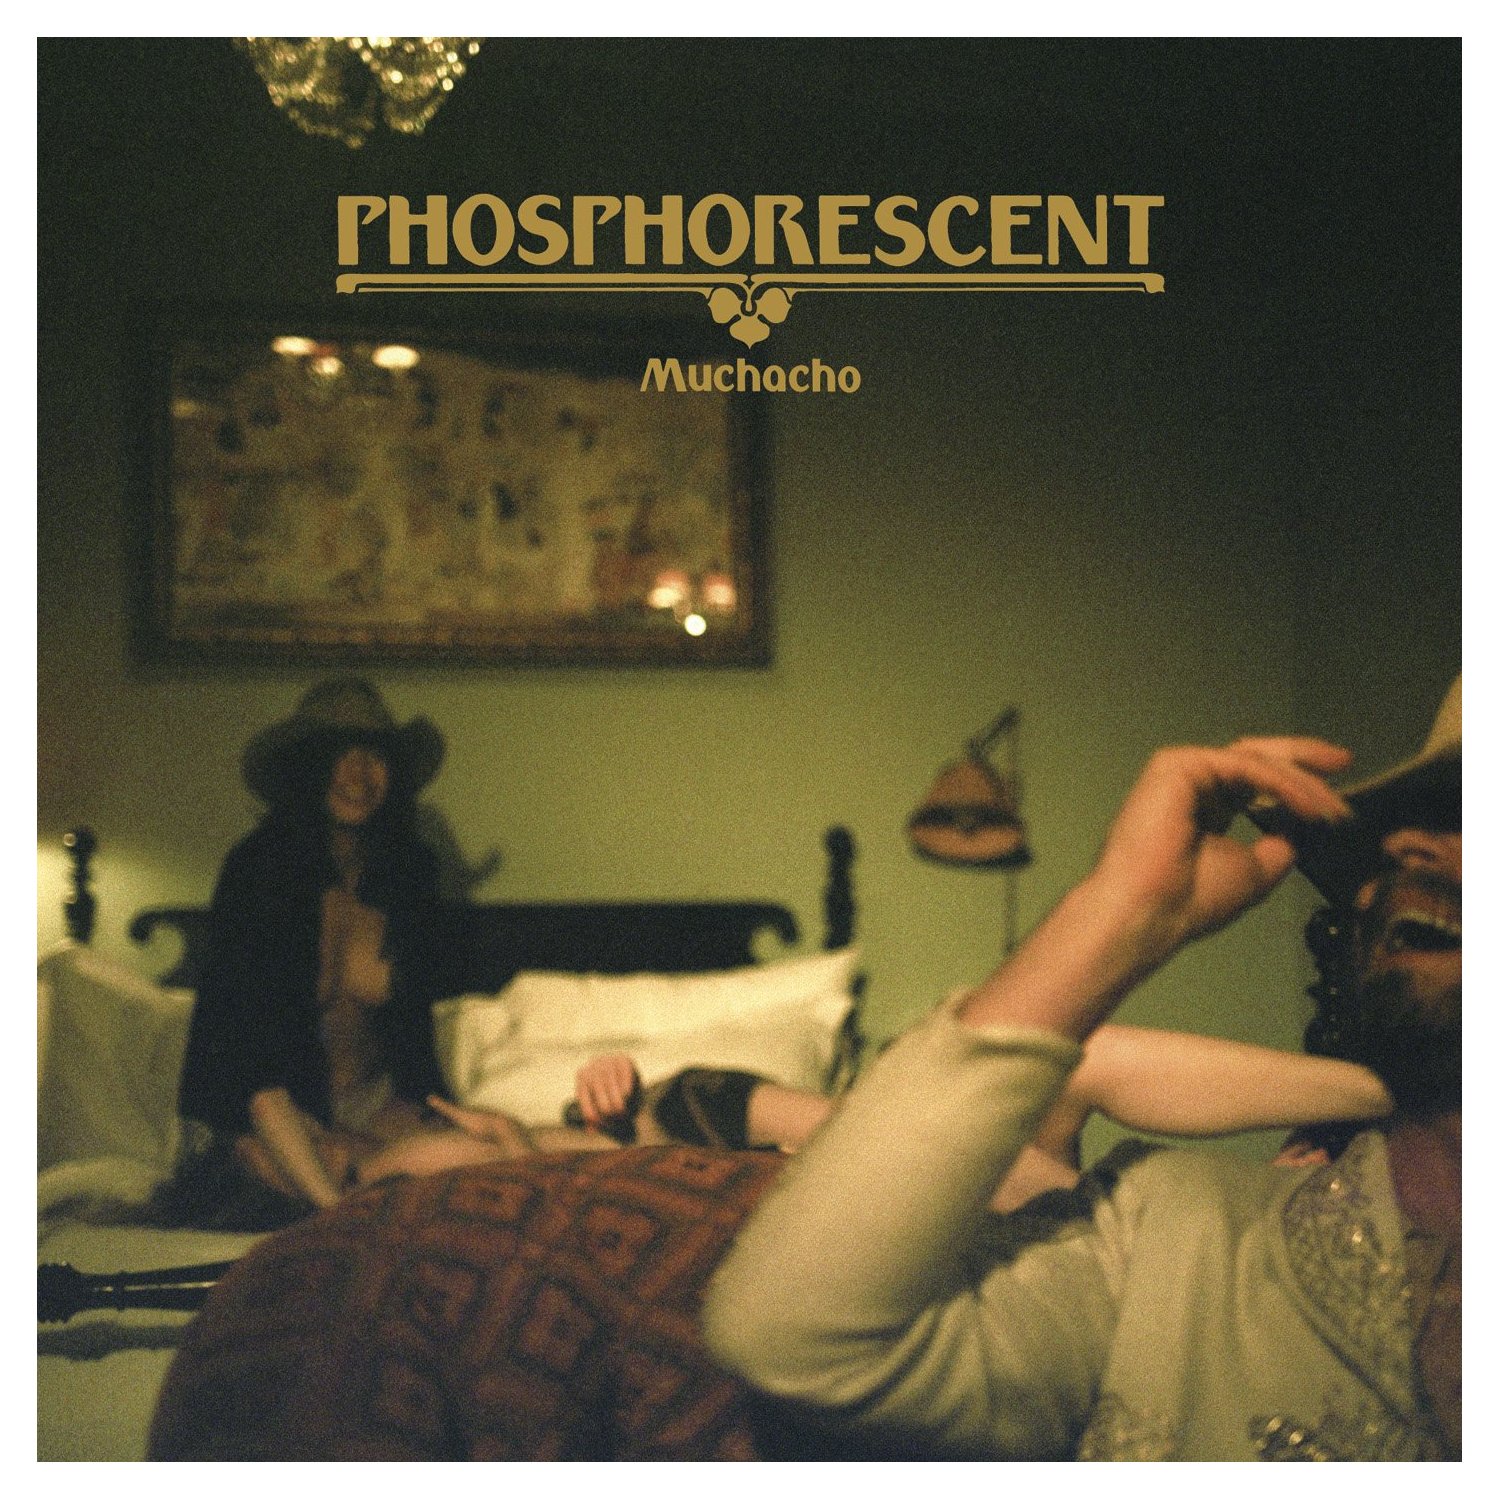 phosphorescent CD cover album image indie rock country folk